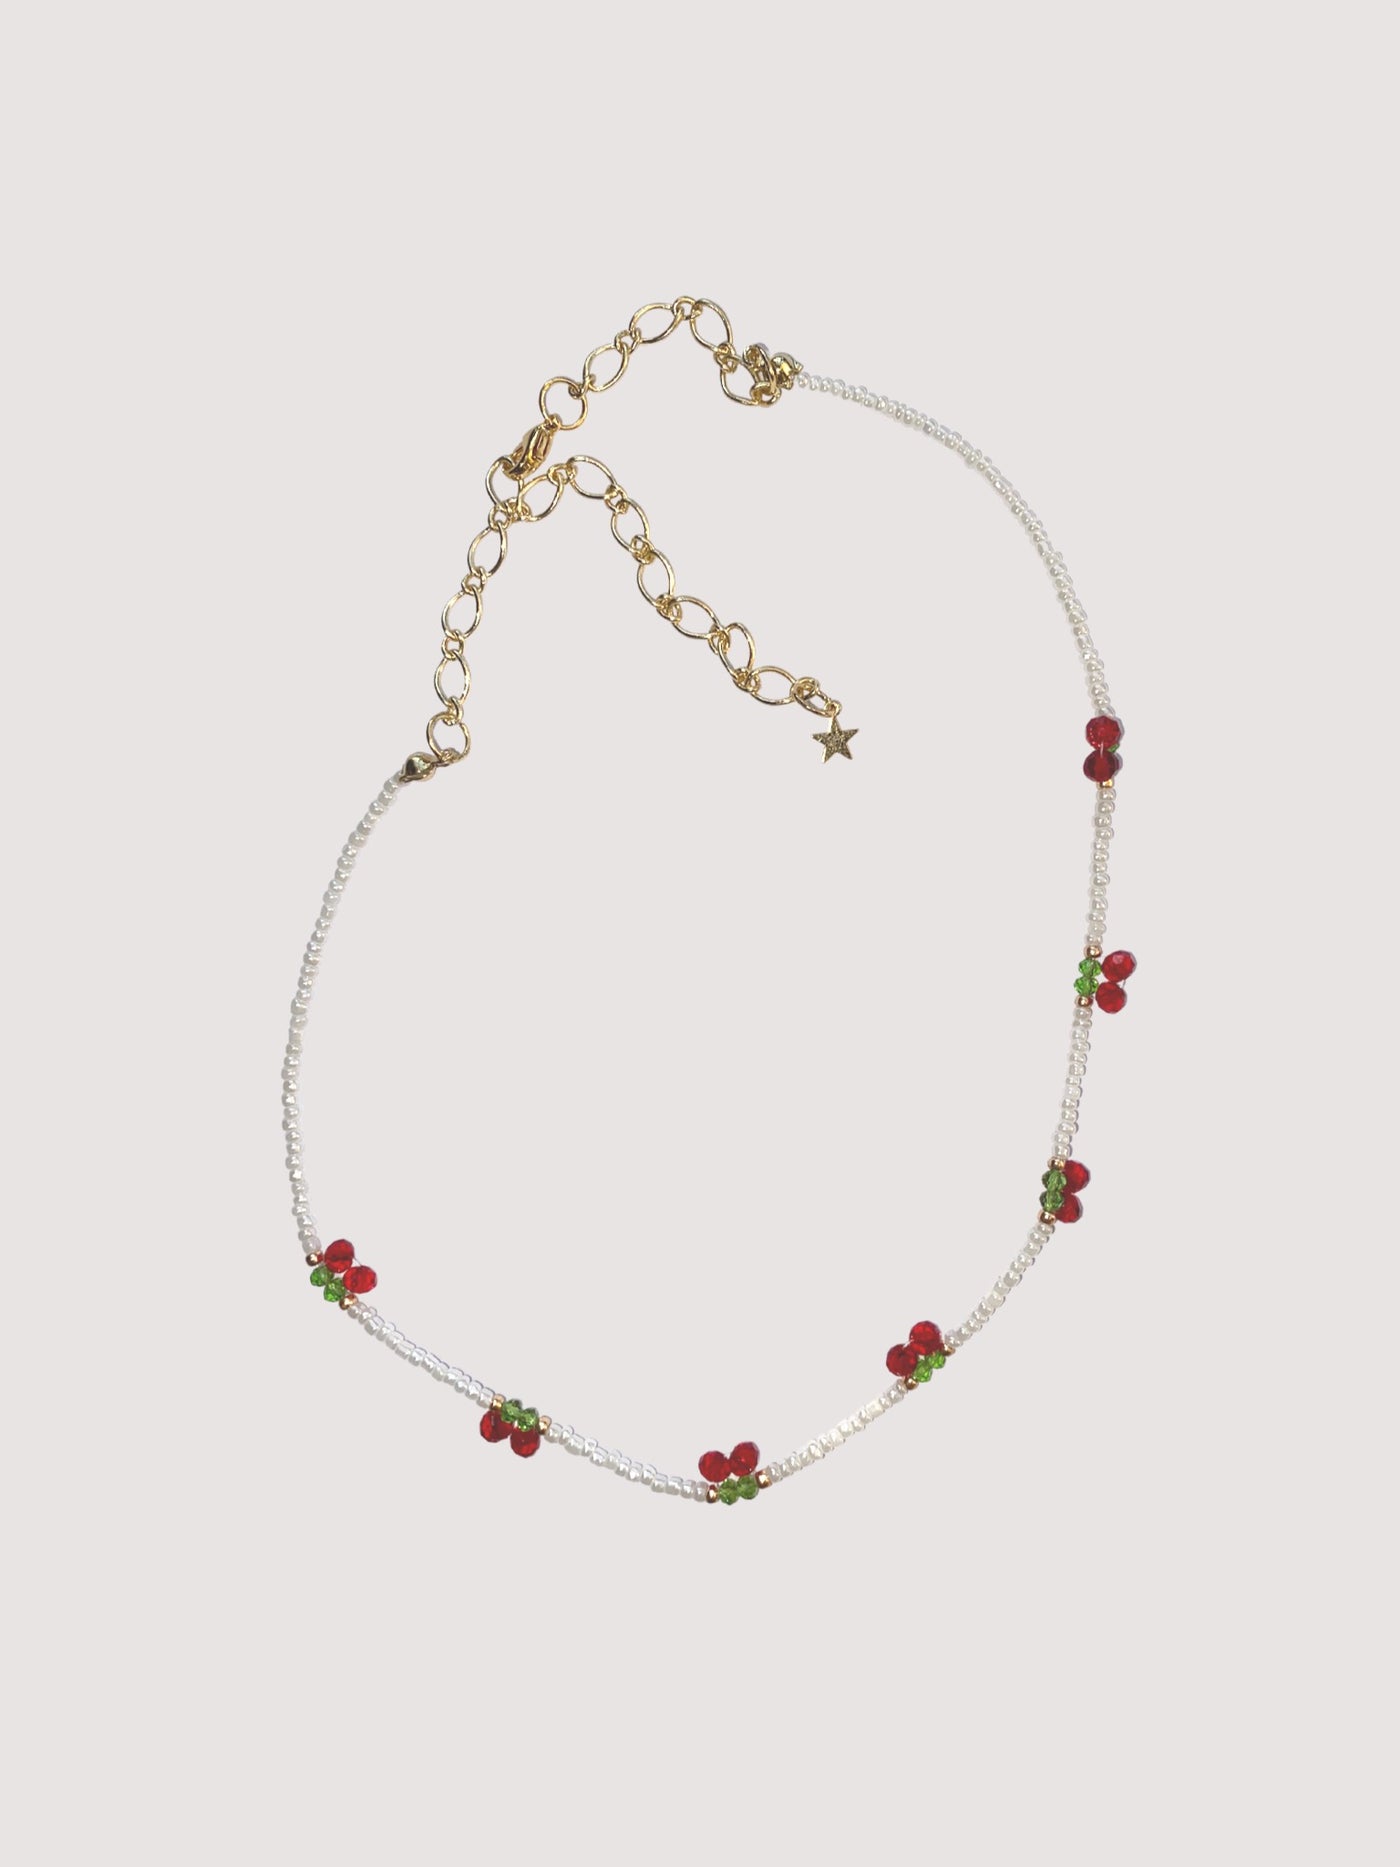 Cherry necklace